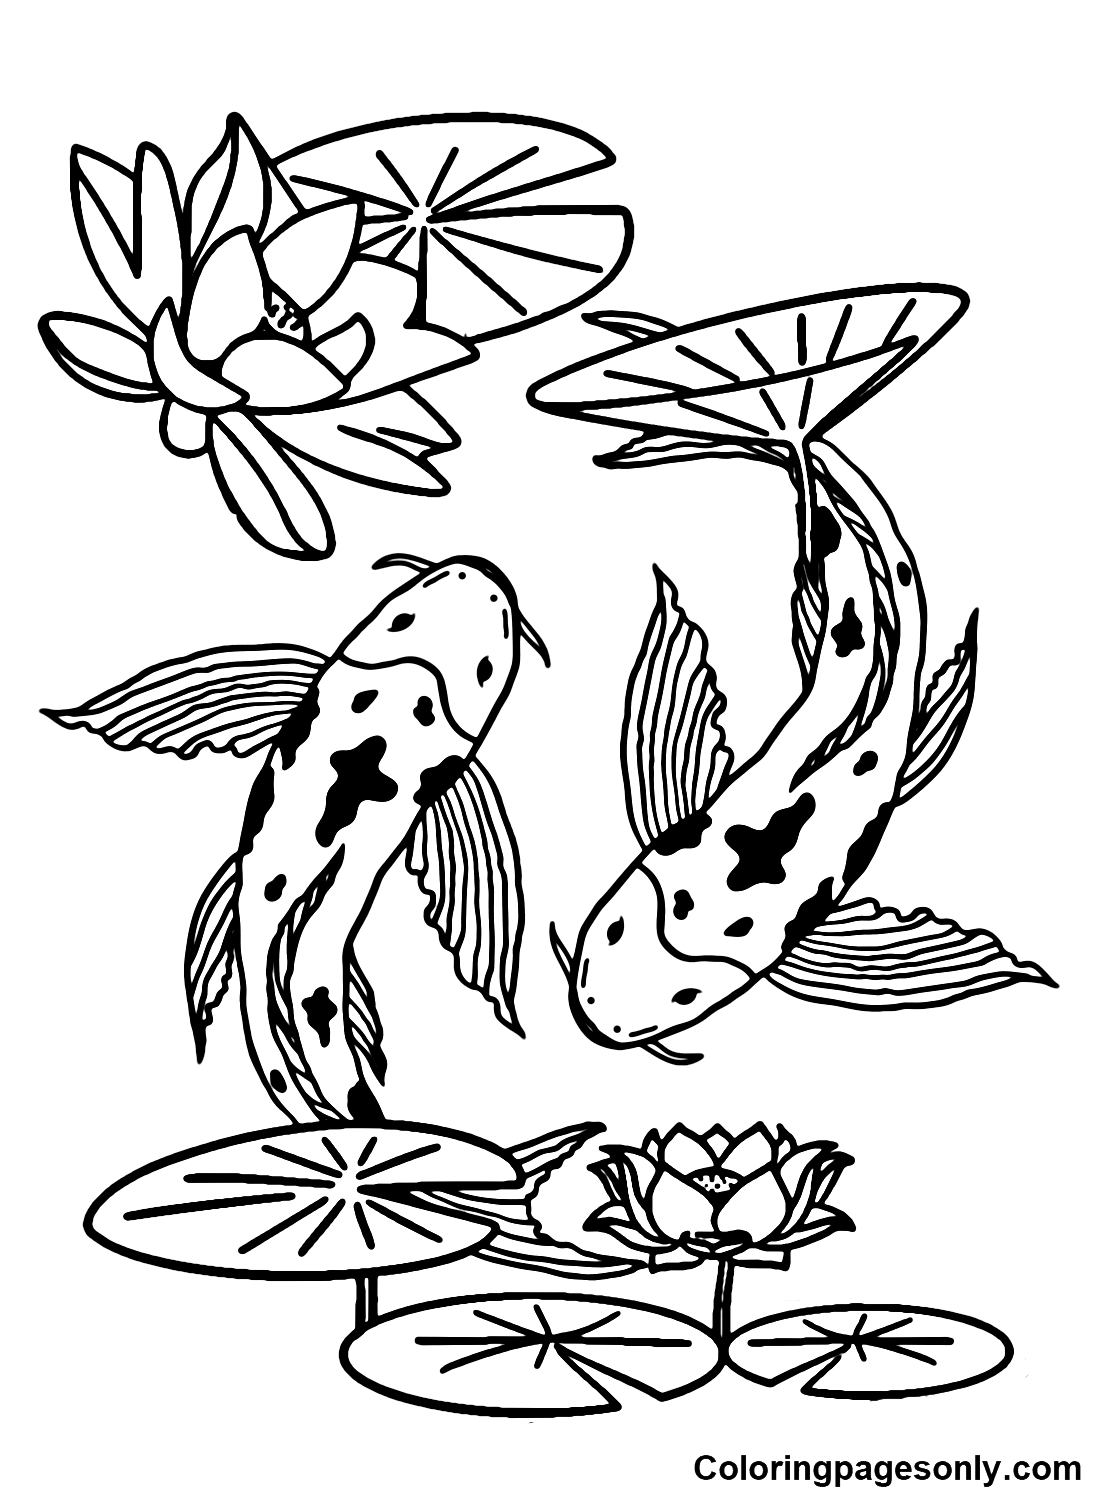 Printable Koi Fish Images Coloring Page